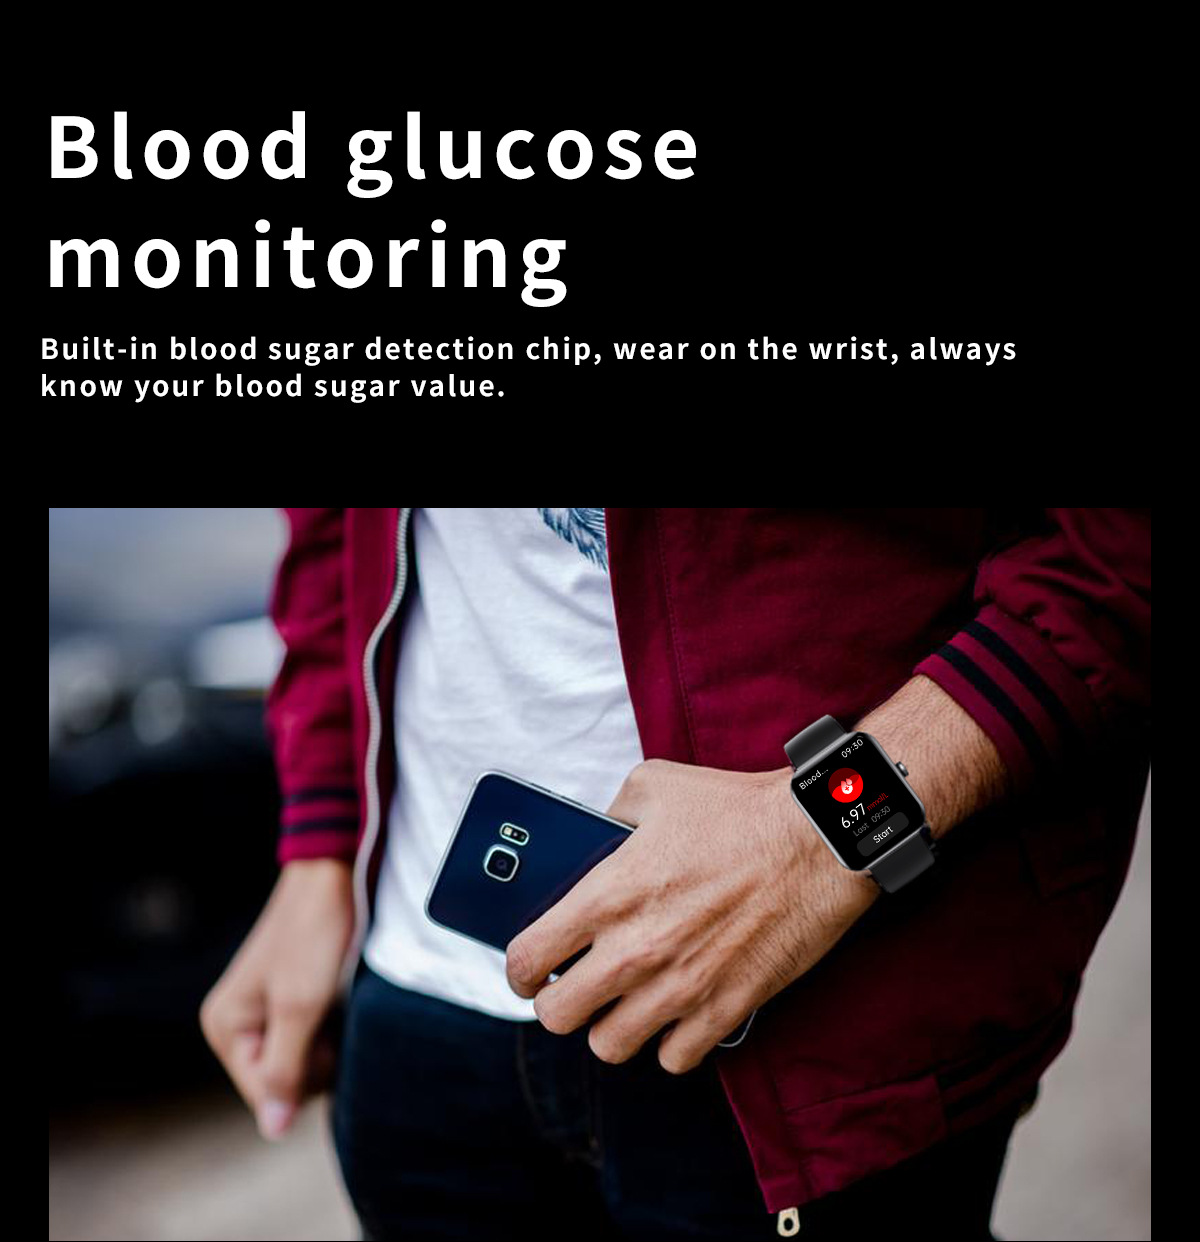 Blood Glucose Monitoring Smartwatch | Smart Watch for Non-Invasive Blood Glucose Testing - Blood Glucose Monitoring Smartwatch Smart Watch for Non Invasive Blood Glucose Testing 7